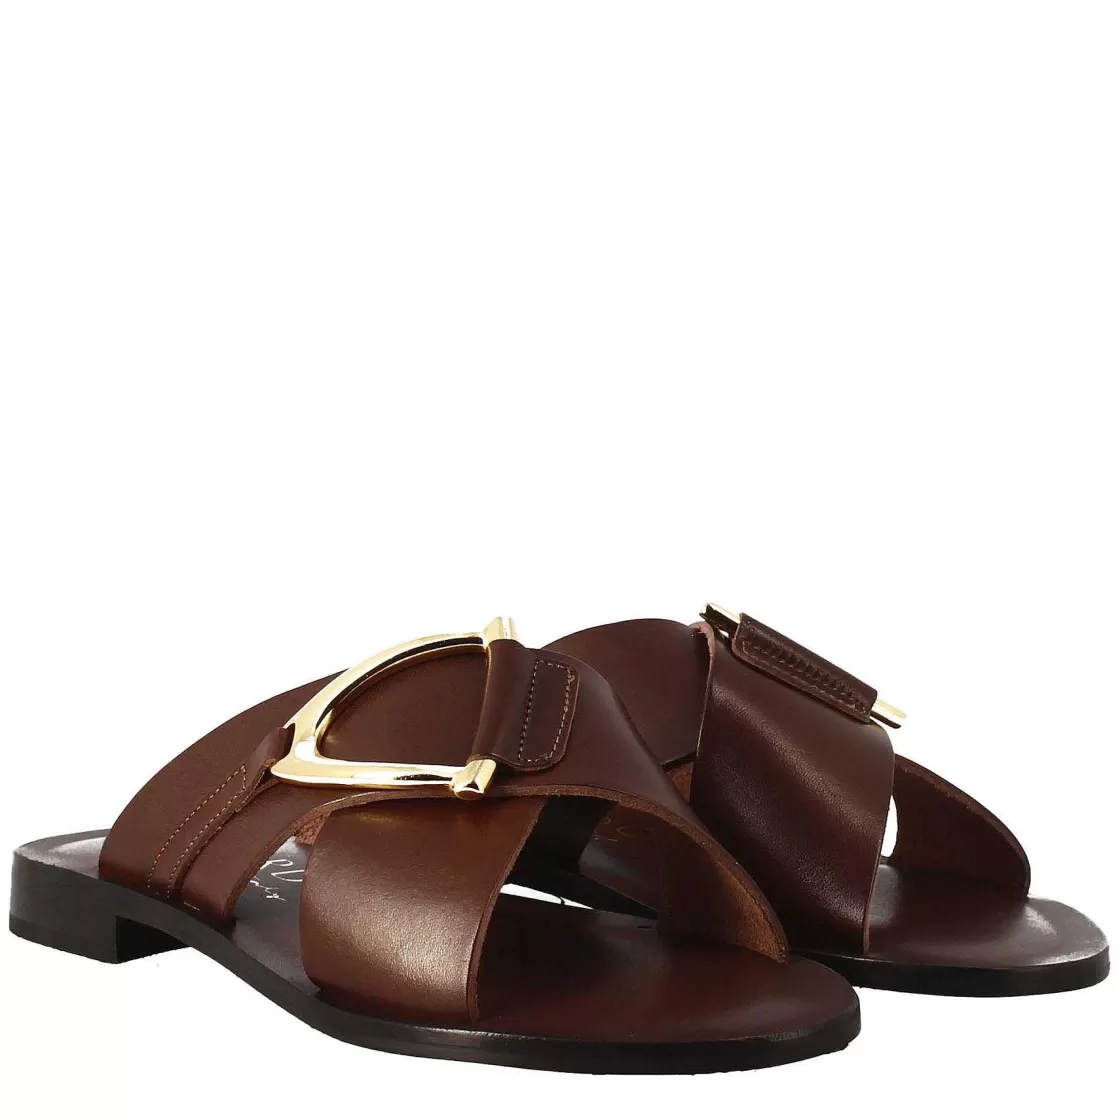 Leonardo Women'S Handmade Flat Slipper Sandals In Tan Leather With Golden Buckle Discount